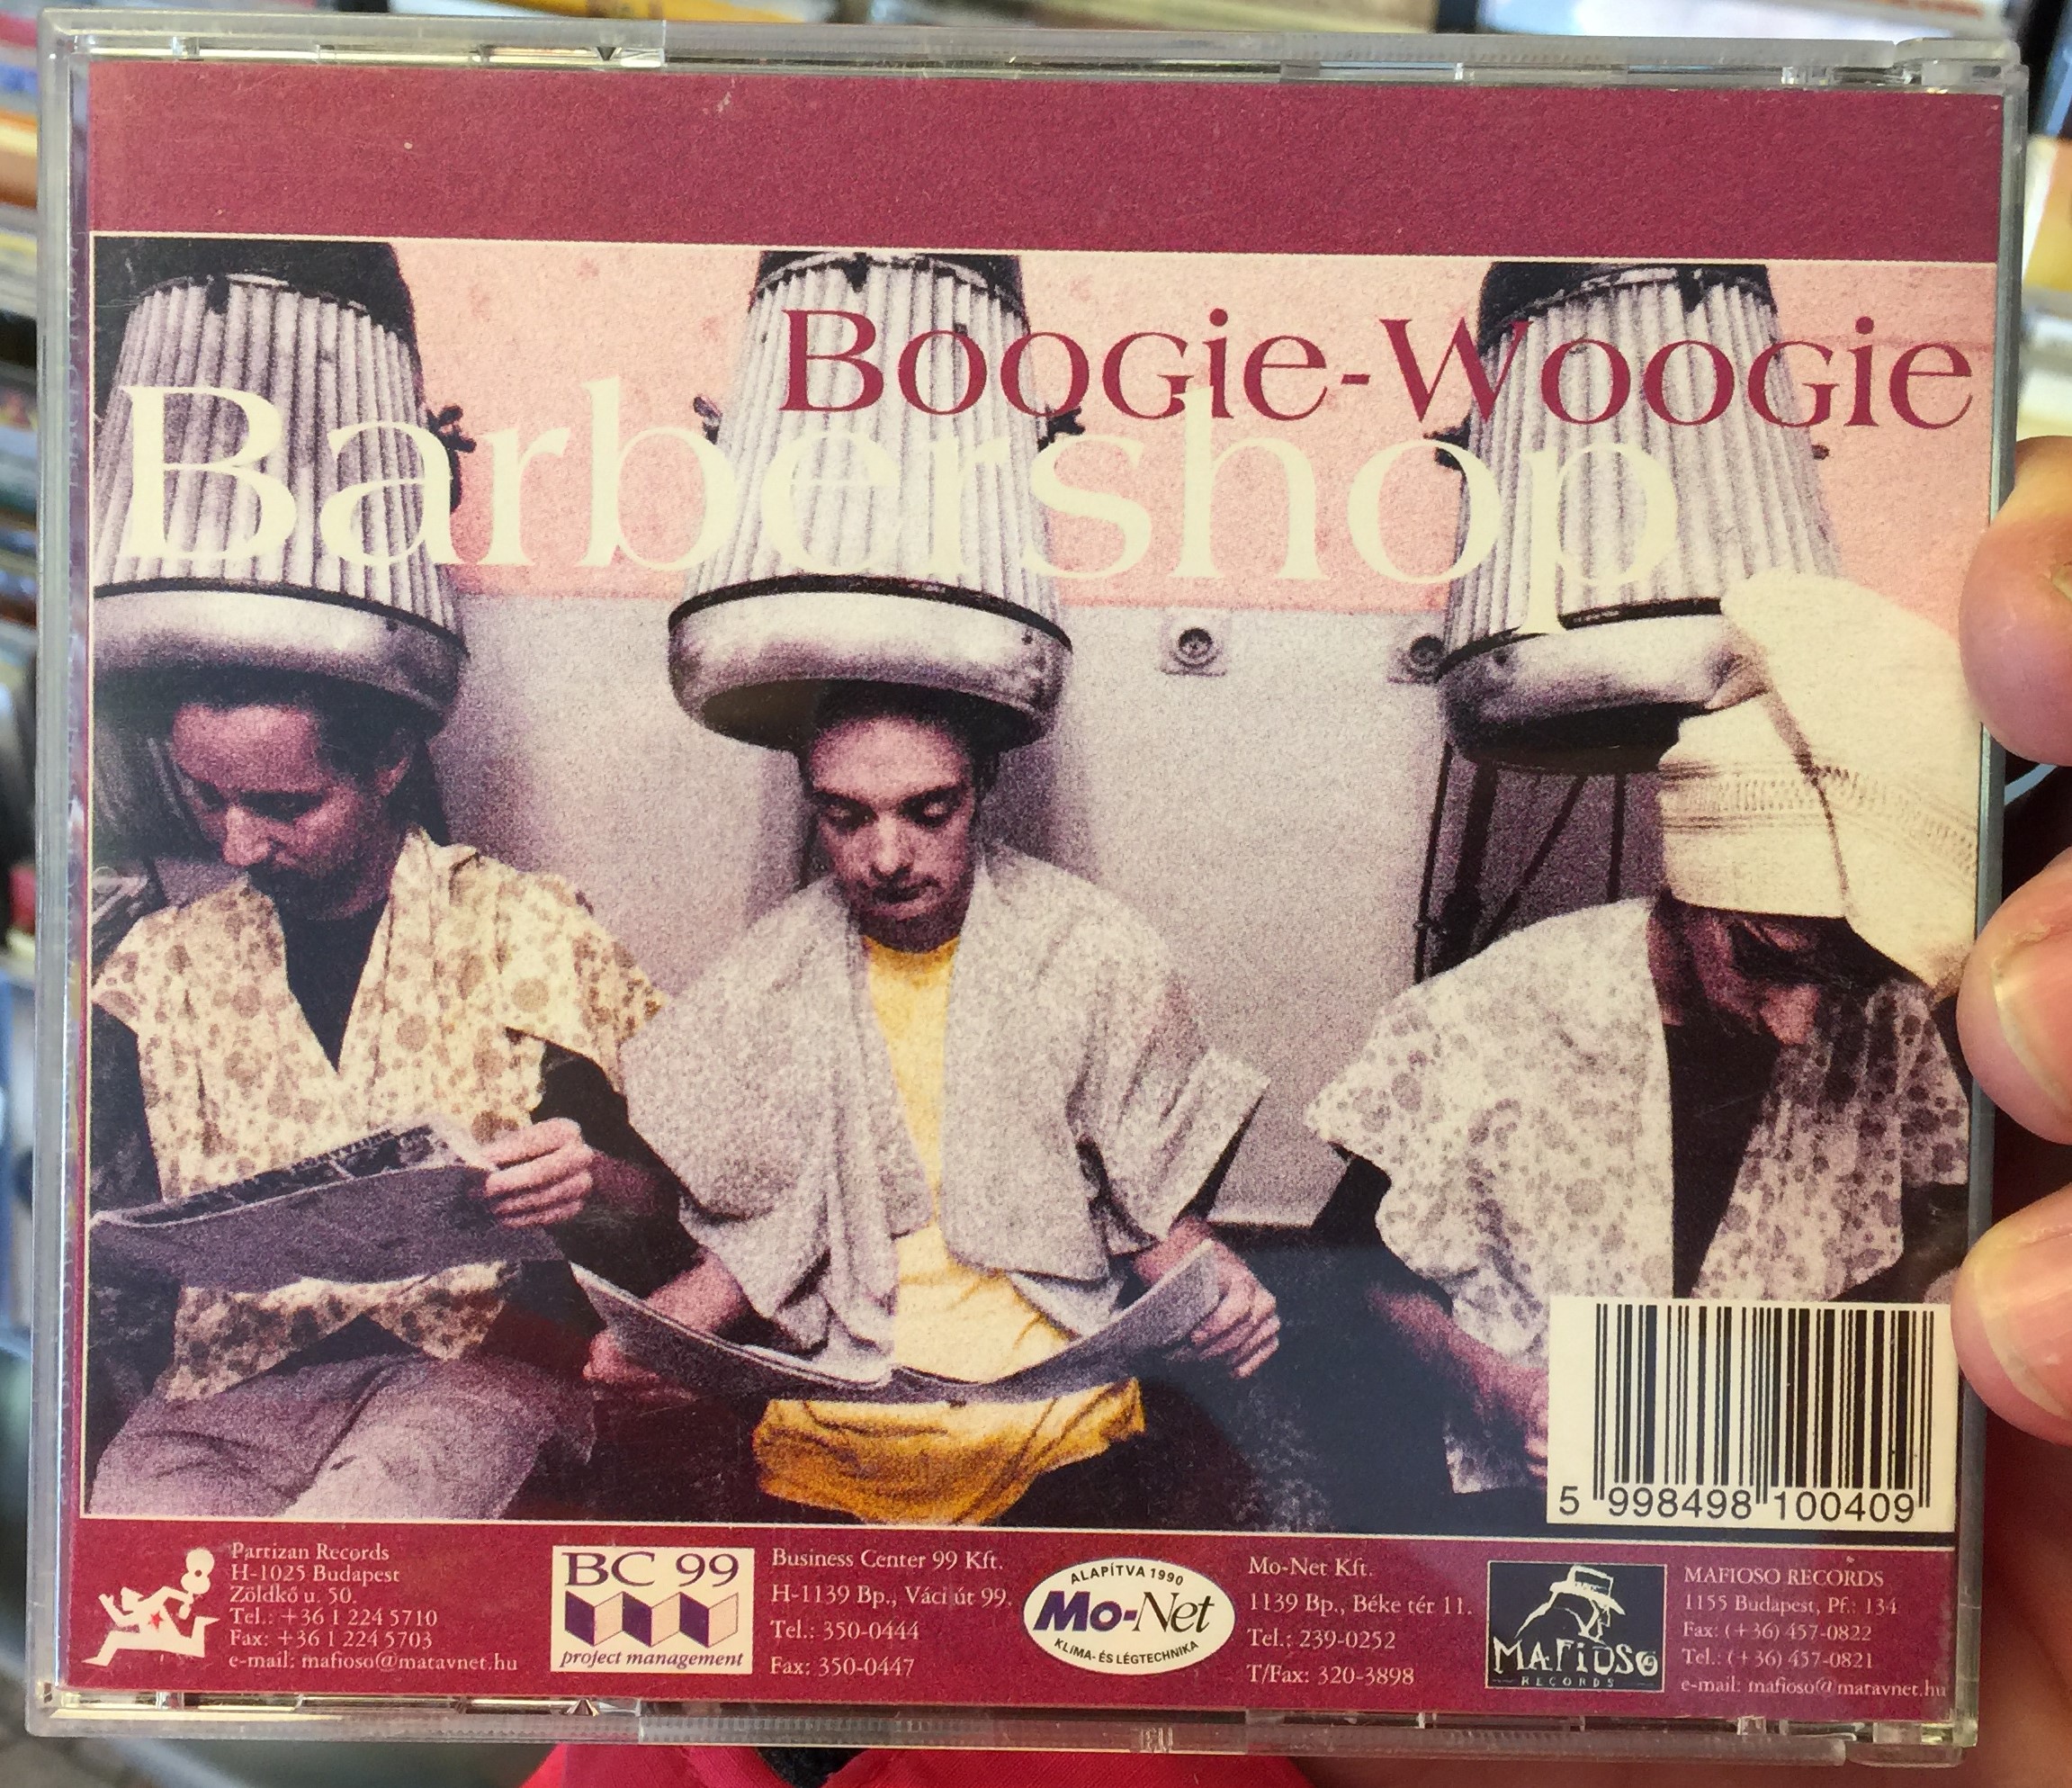 boogie-woogie-barbershop-spo-dee-o-dee-partizan-records-audio-cd-2000-prcd-1004-2-.jpg